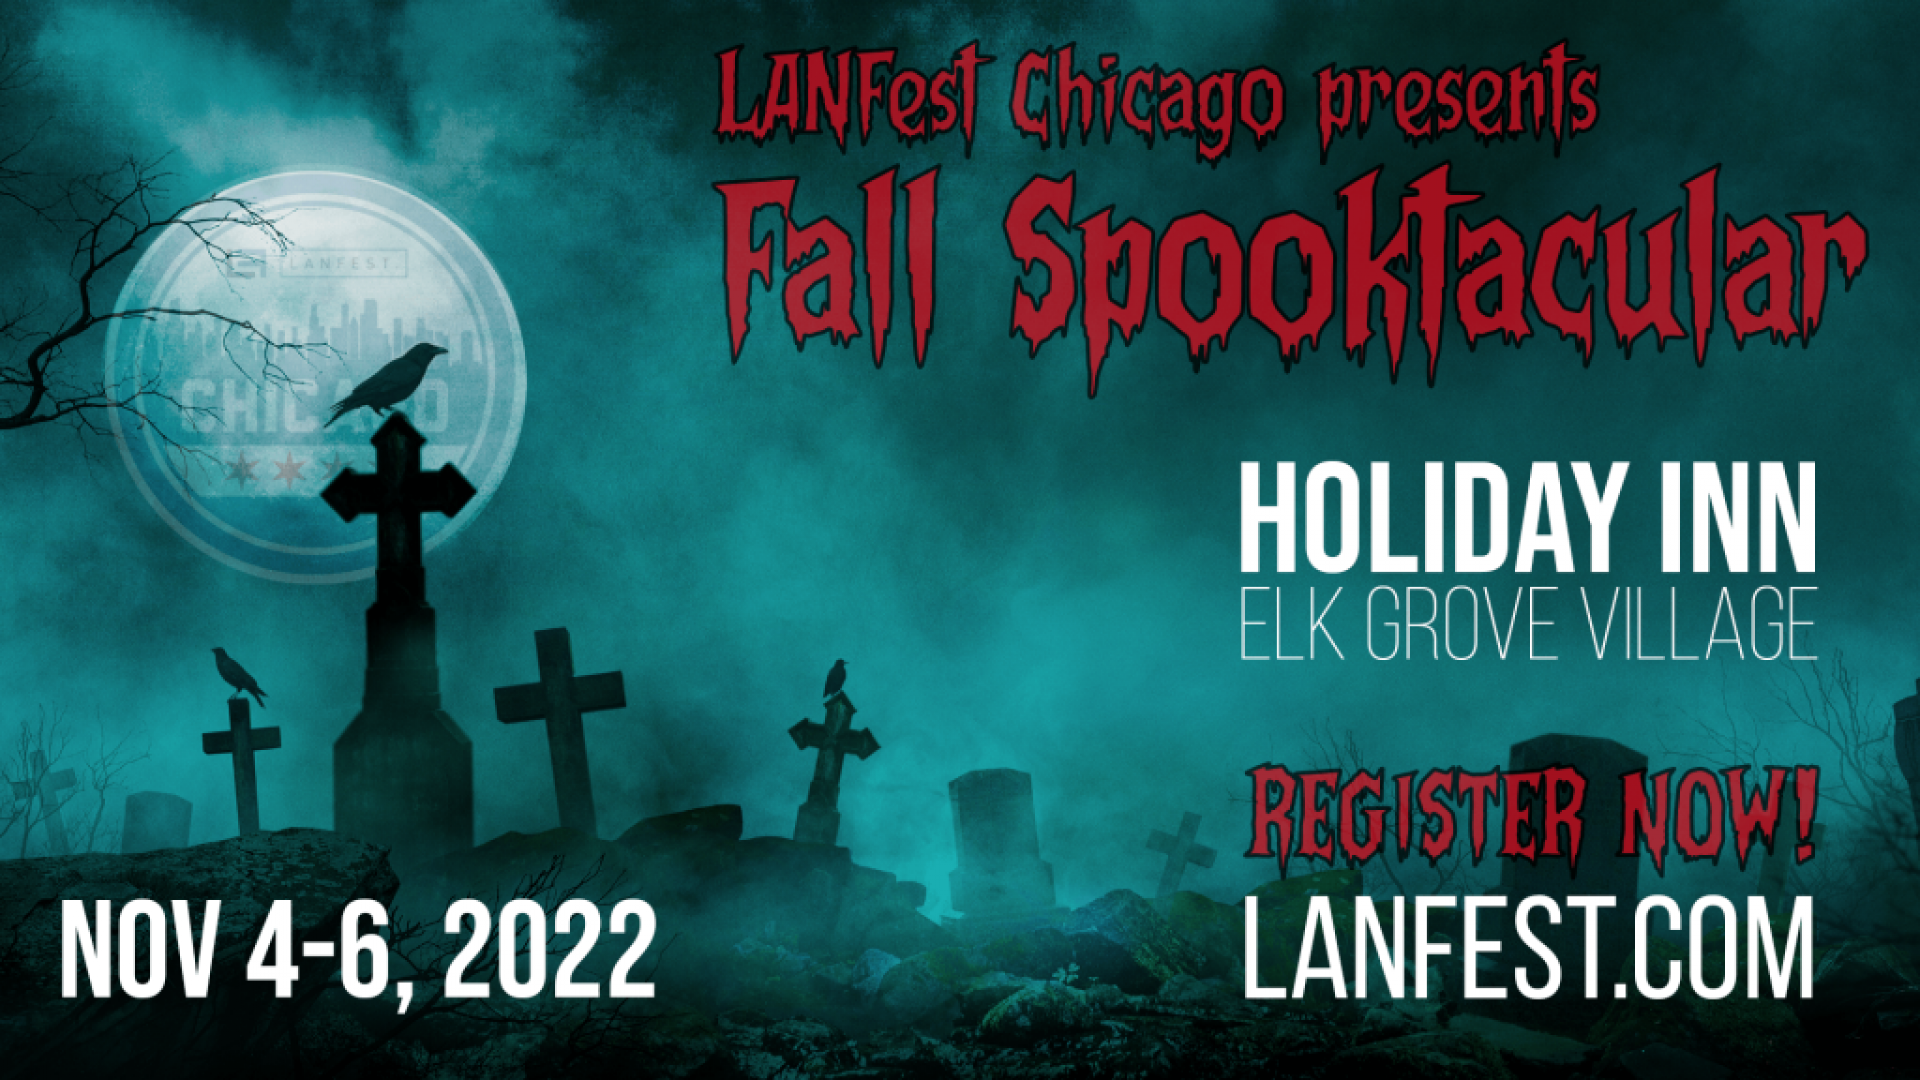 LANFEST_CHICAGO_Spooktacular2022_REGISTERNOW